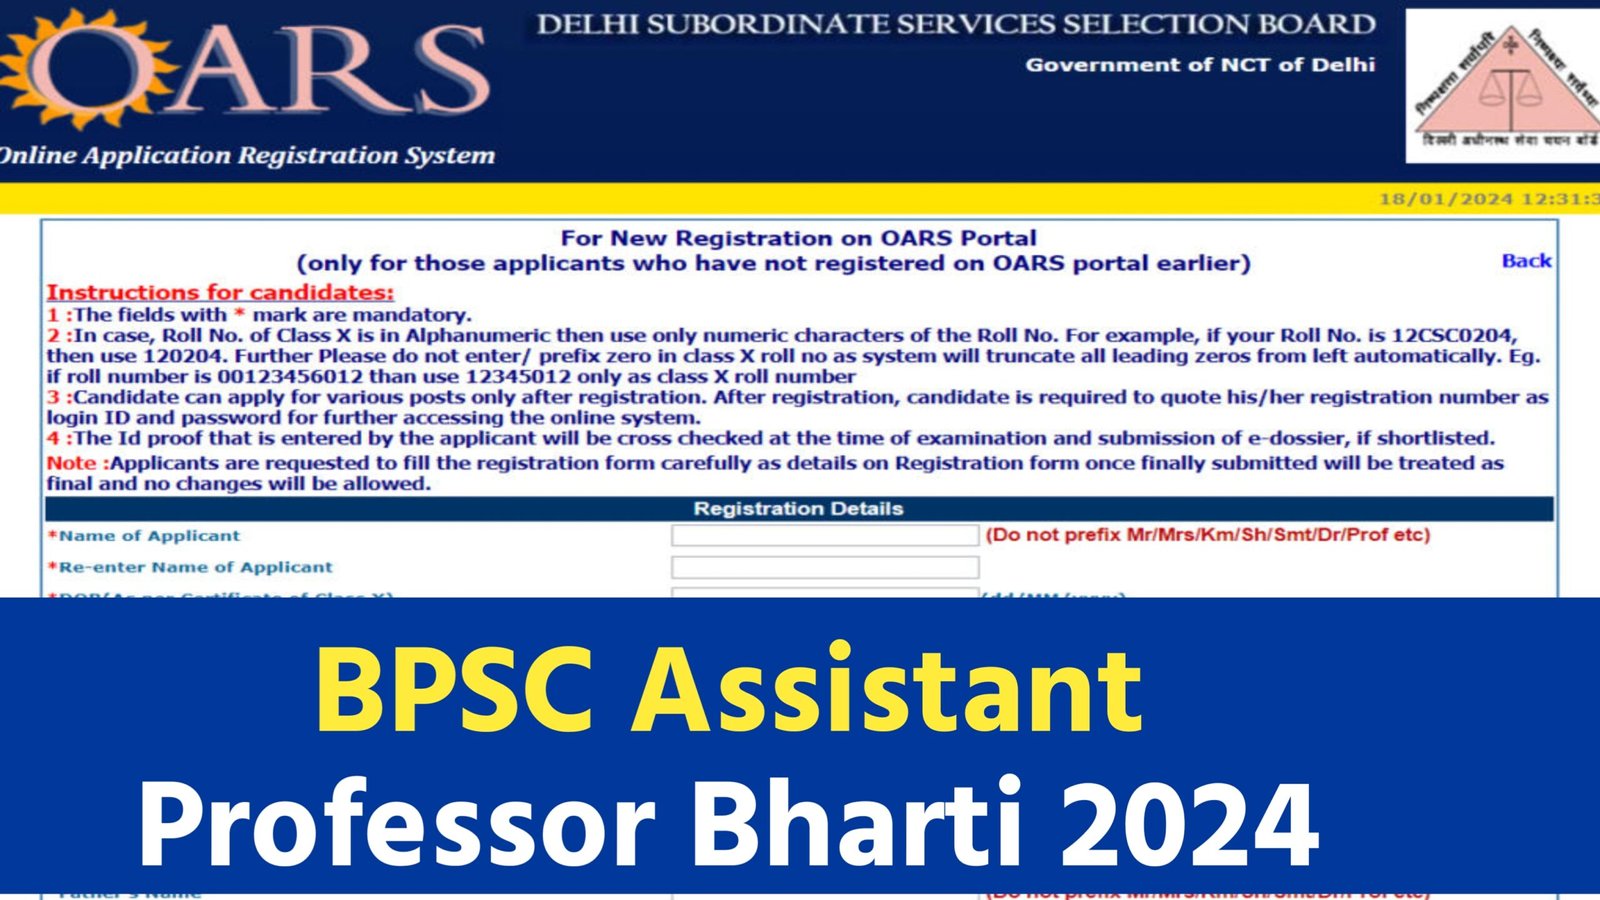 BPSC Assistant Professor Bharti 2024